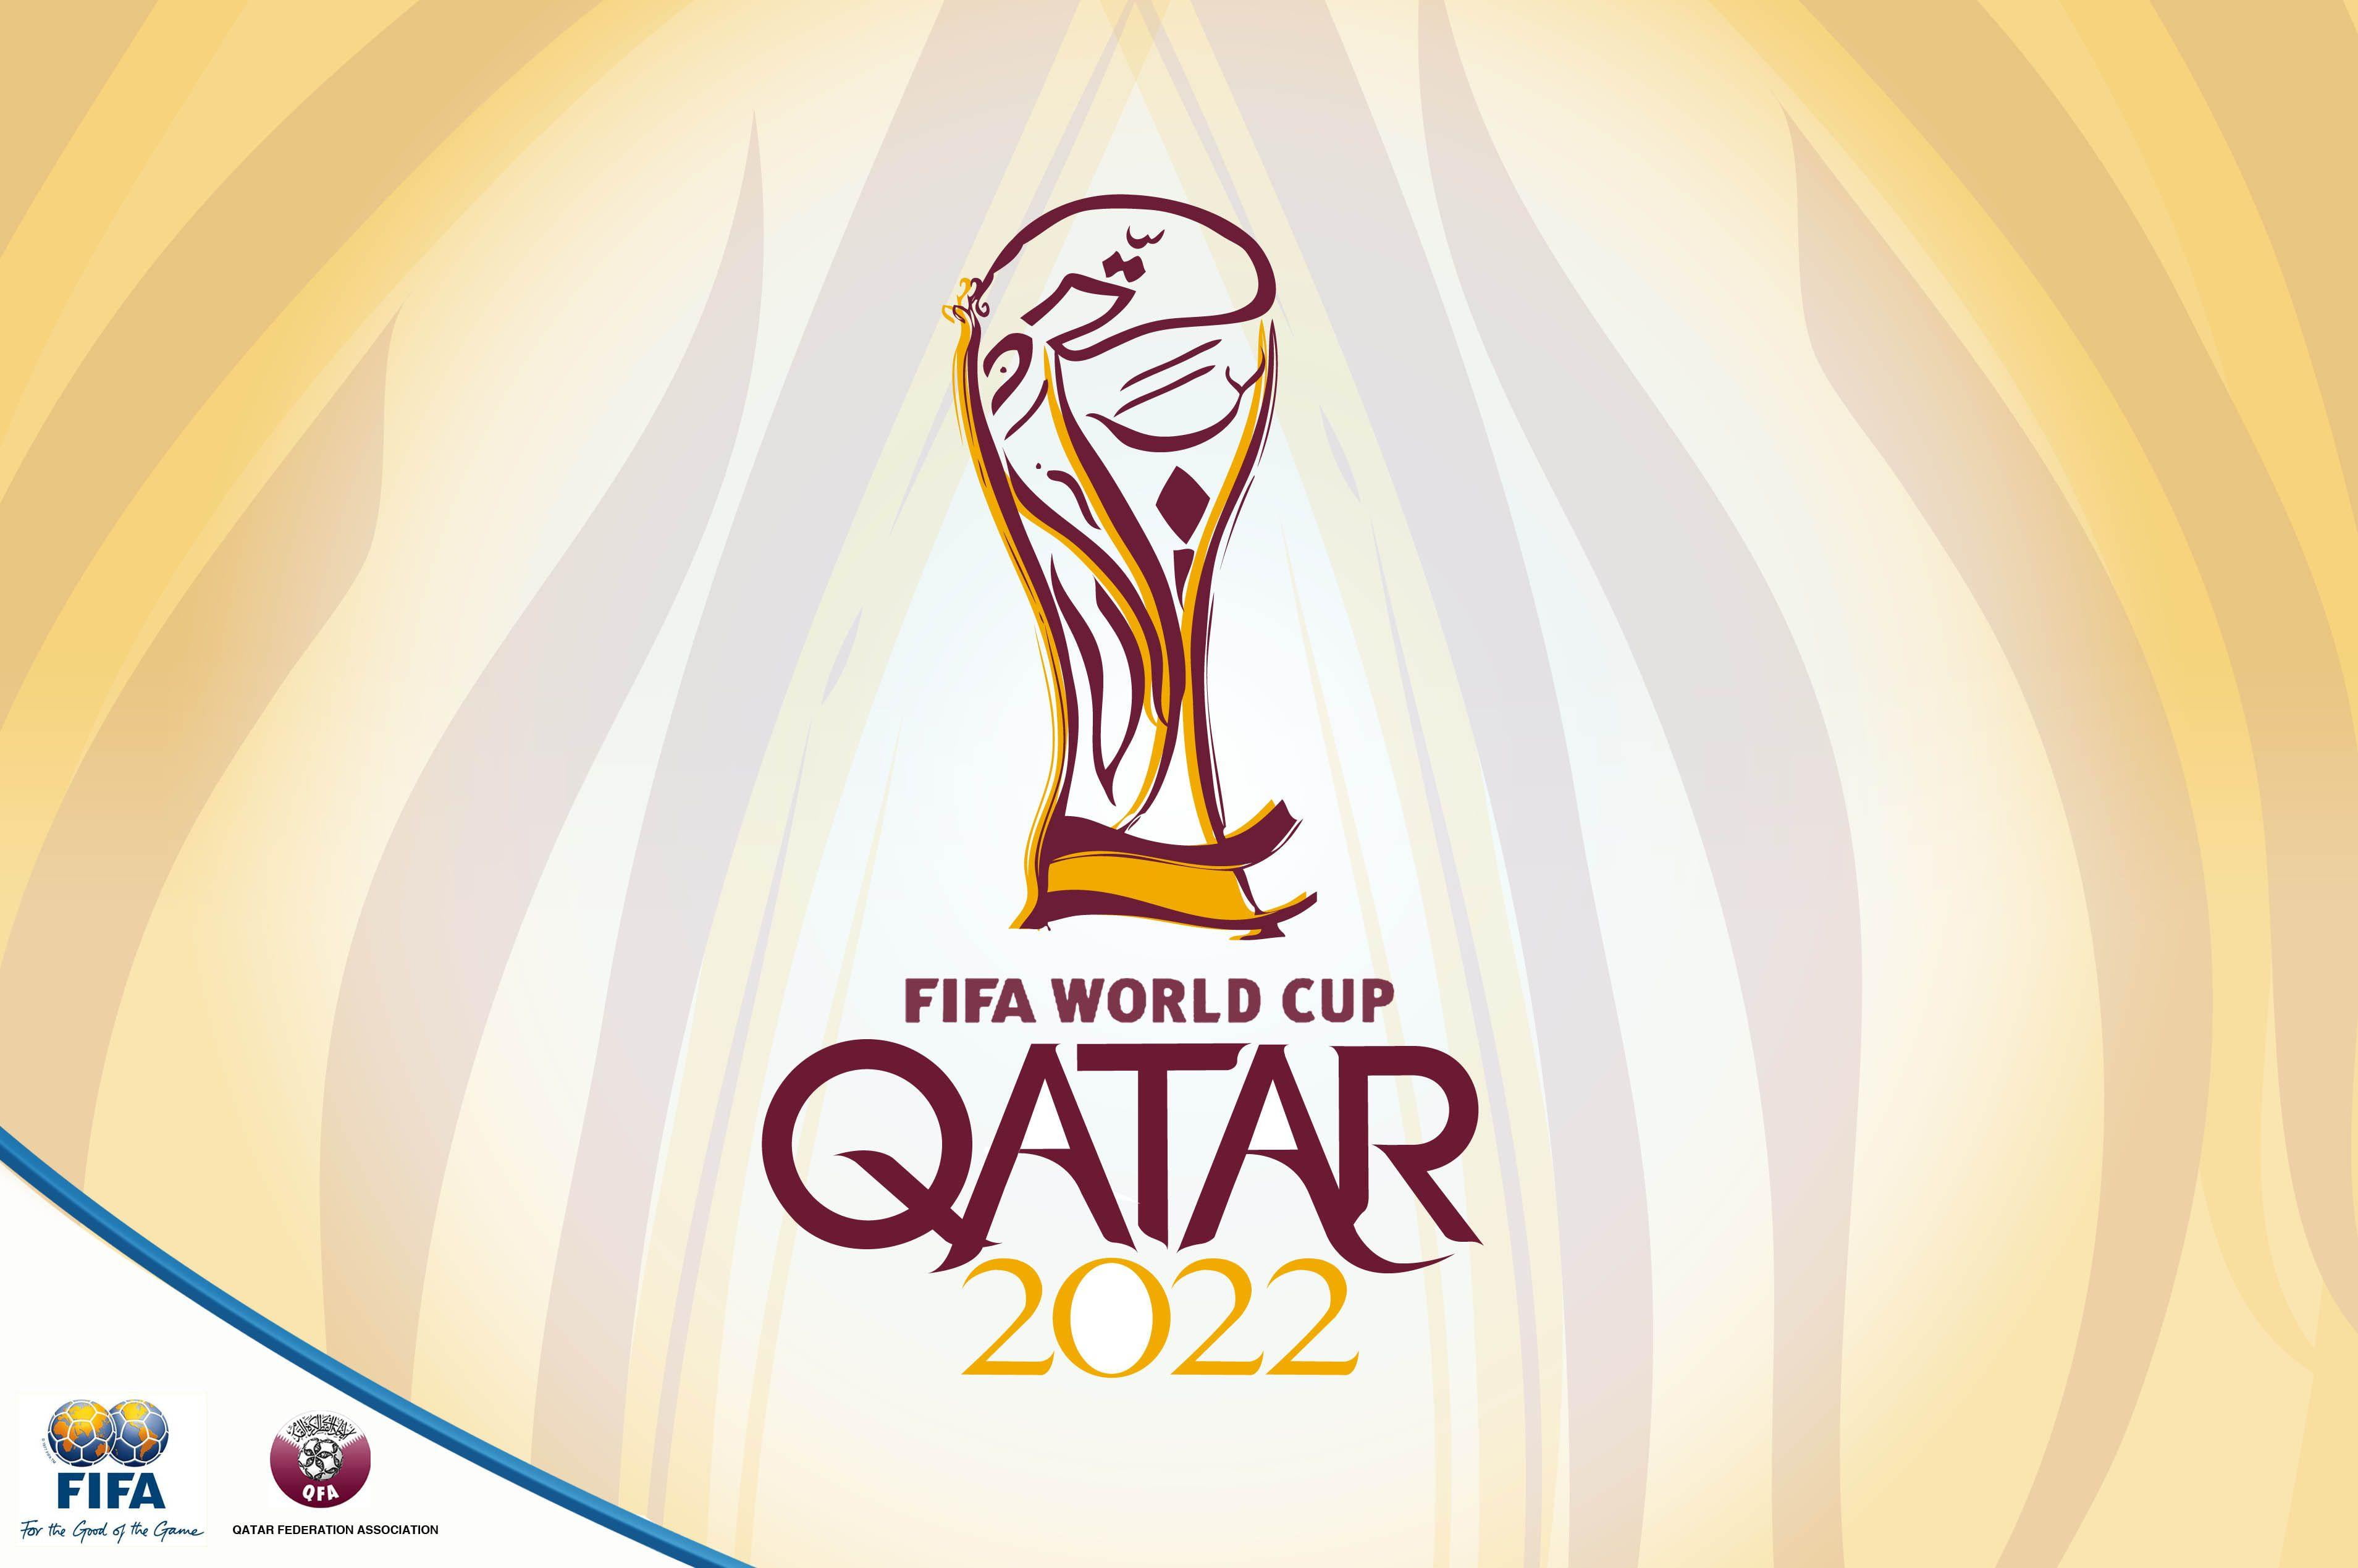 2022 (Year), sport, soccer, Fifa World Cup 2022